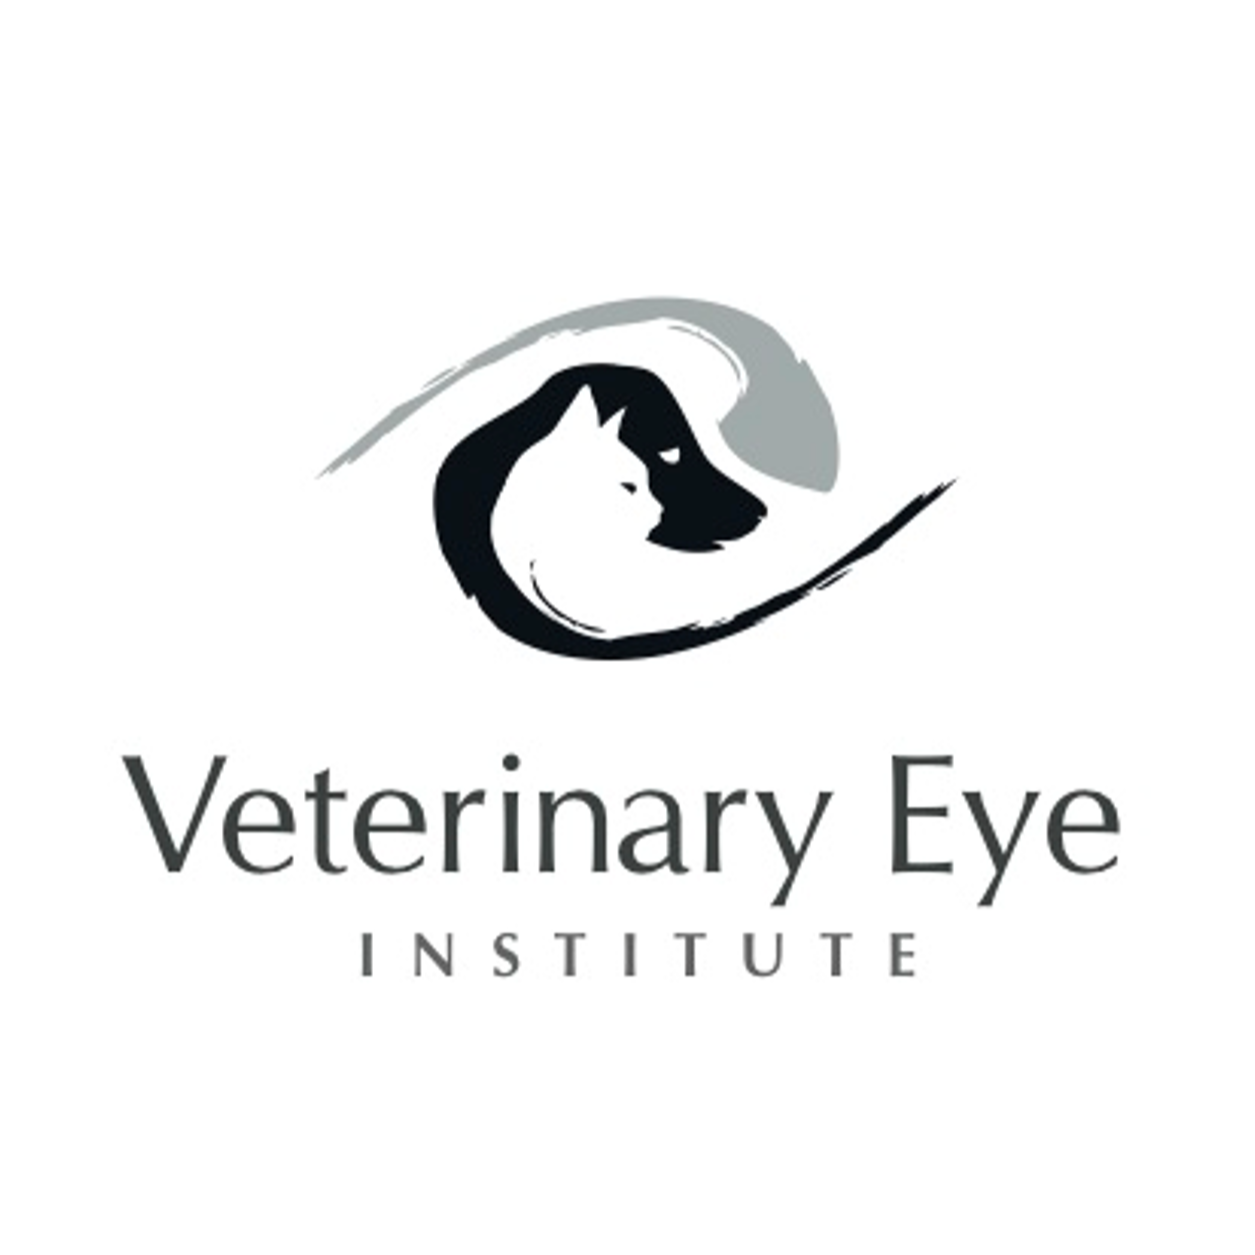 Veterinary Eye Institute Plano - Plano, TX 75025 - (972)727-2020 | ShowMeLocal.com